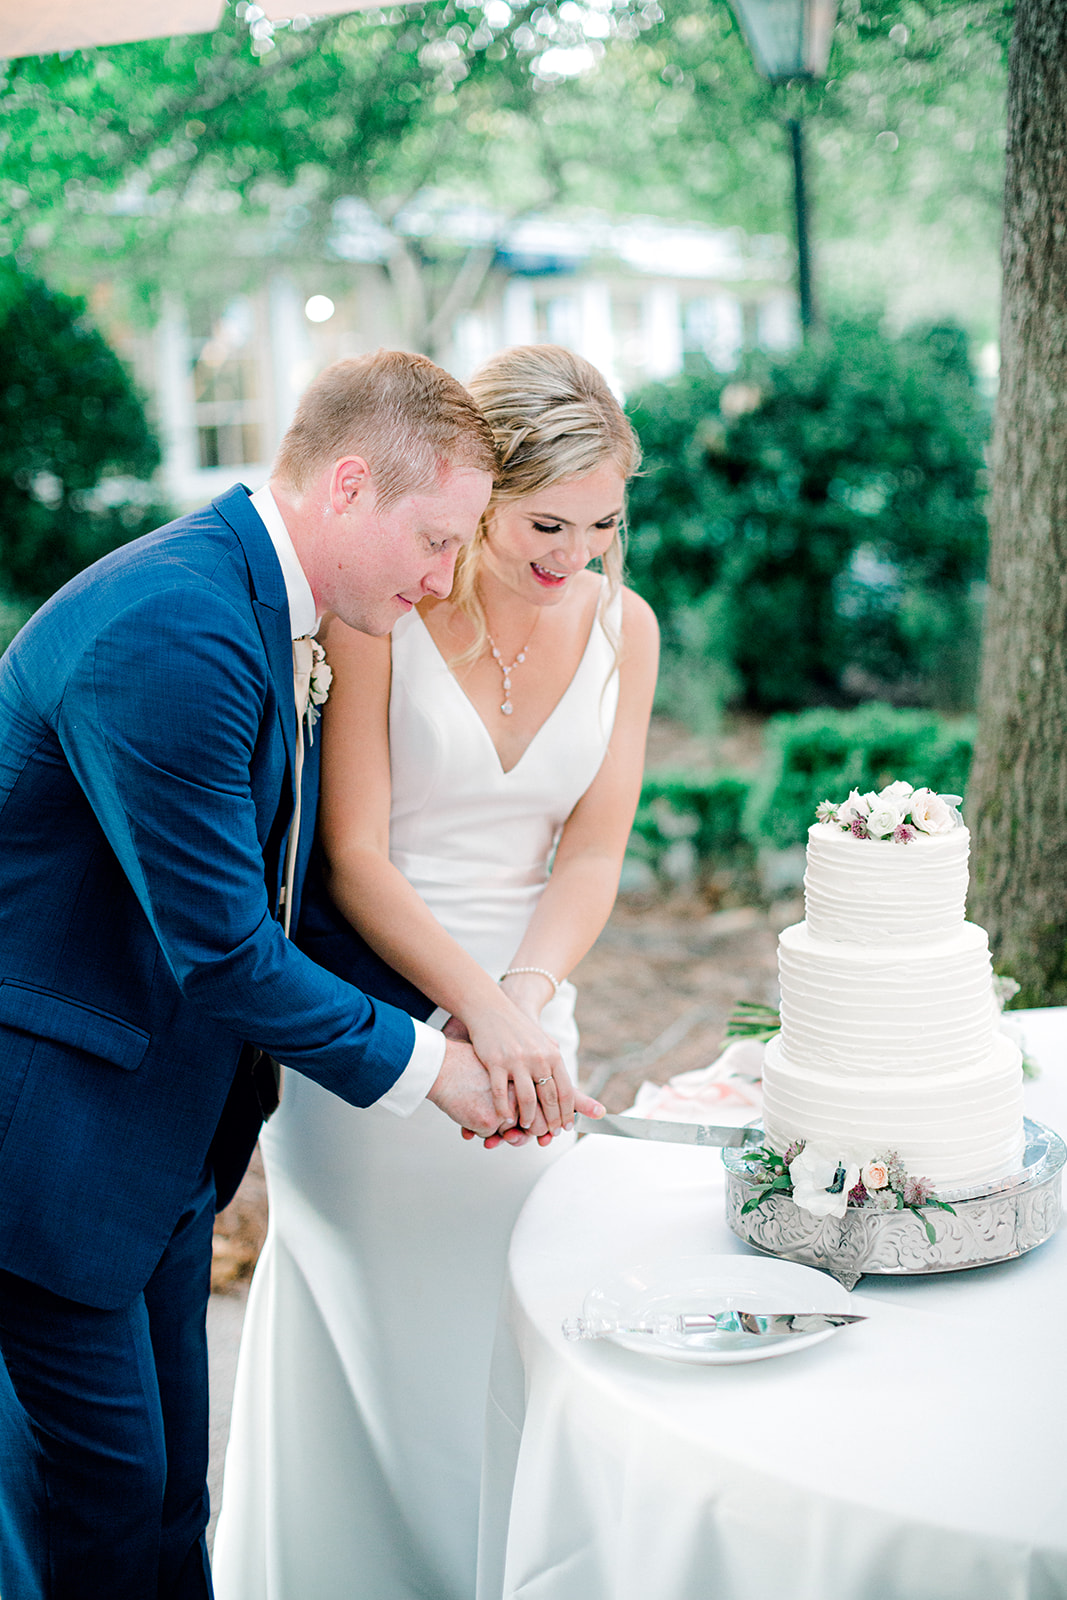 Tennessee Pleasant Hill Mansion Outdoor Wedding | Nashville Bride Guide